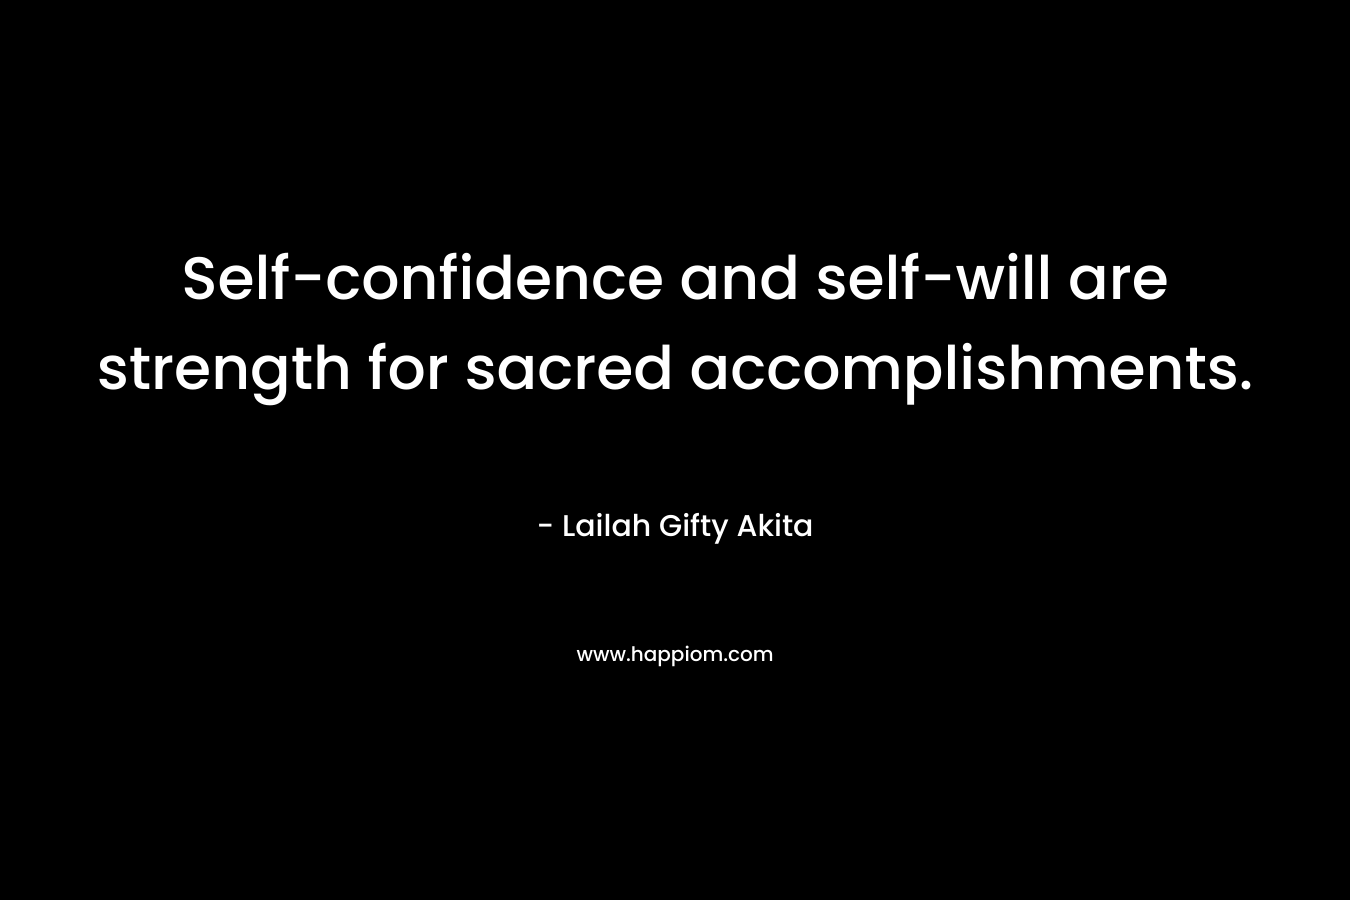 Self-confidence and self-will are strength for sacred accomplishments. – Lailah Gifty Akita